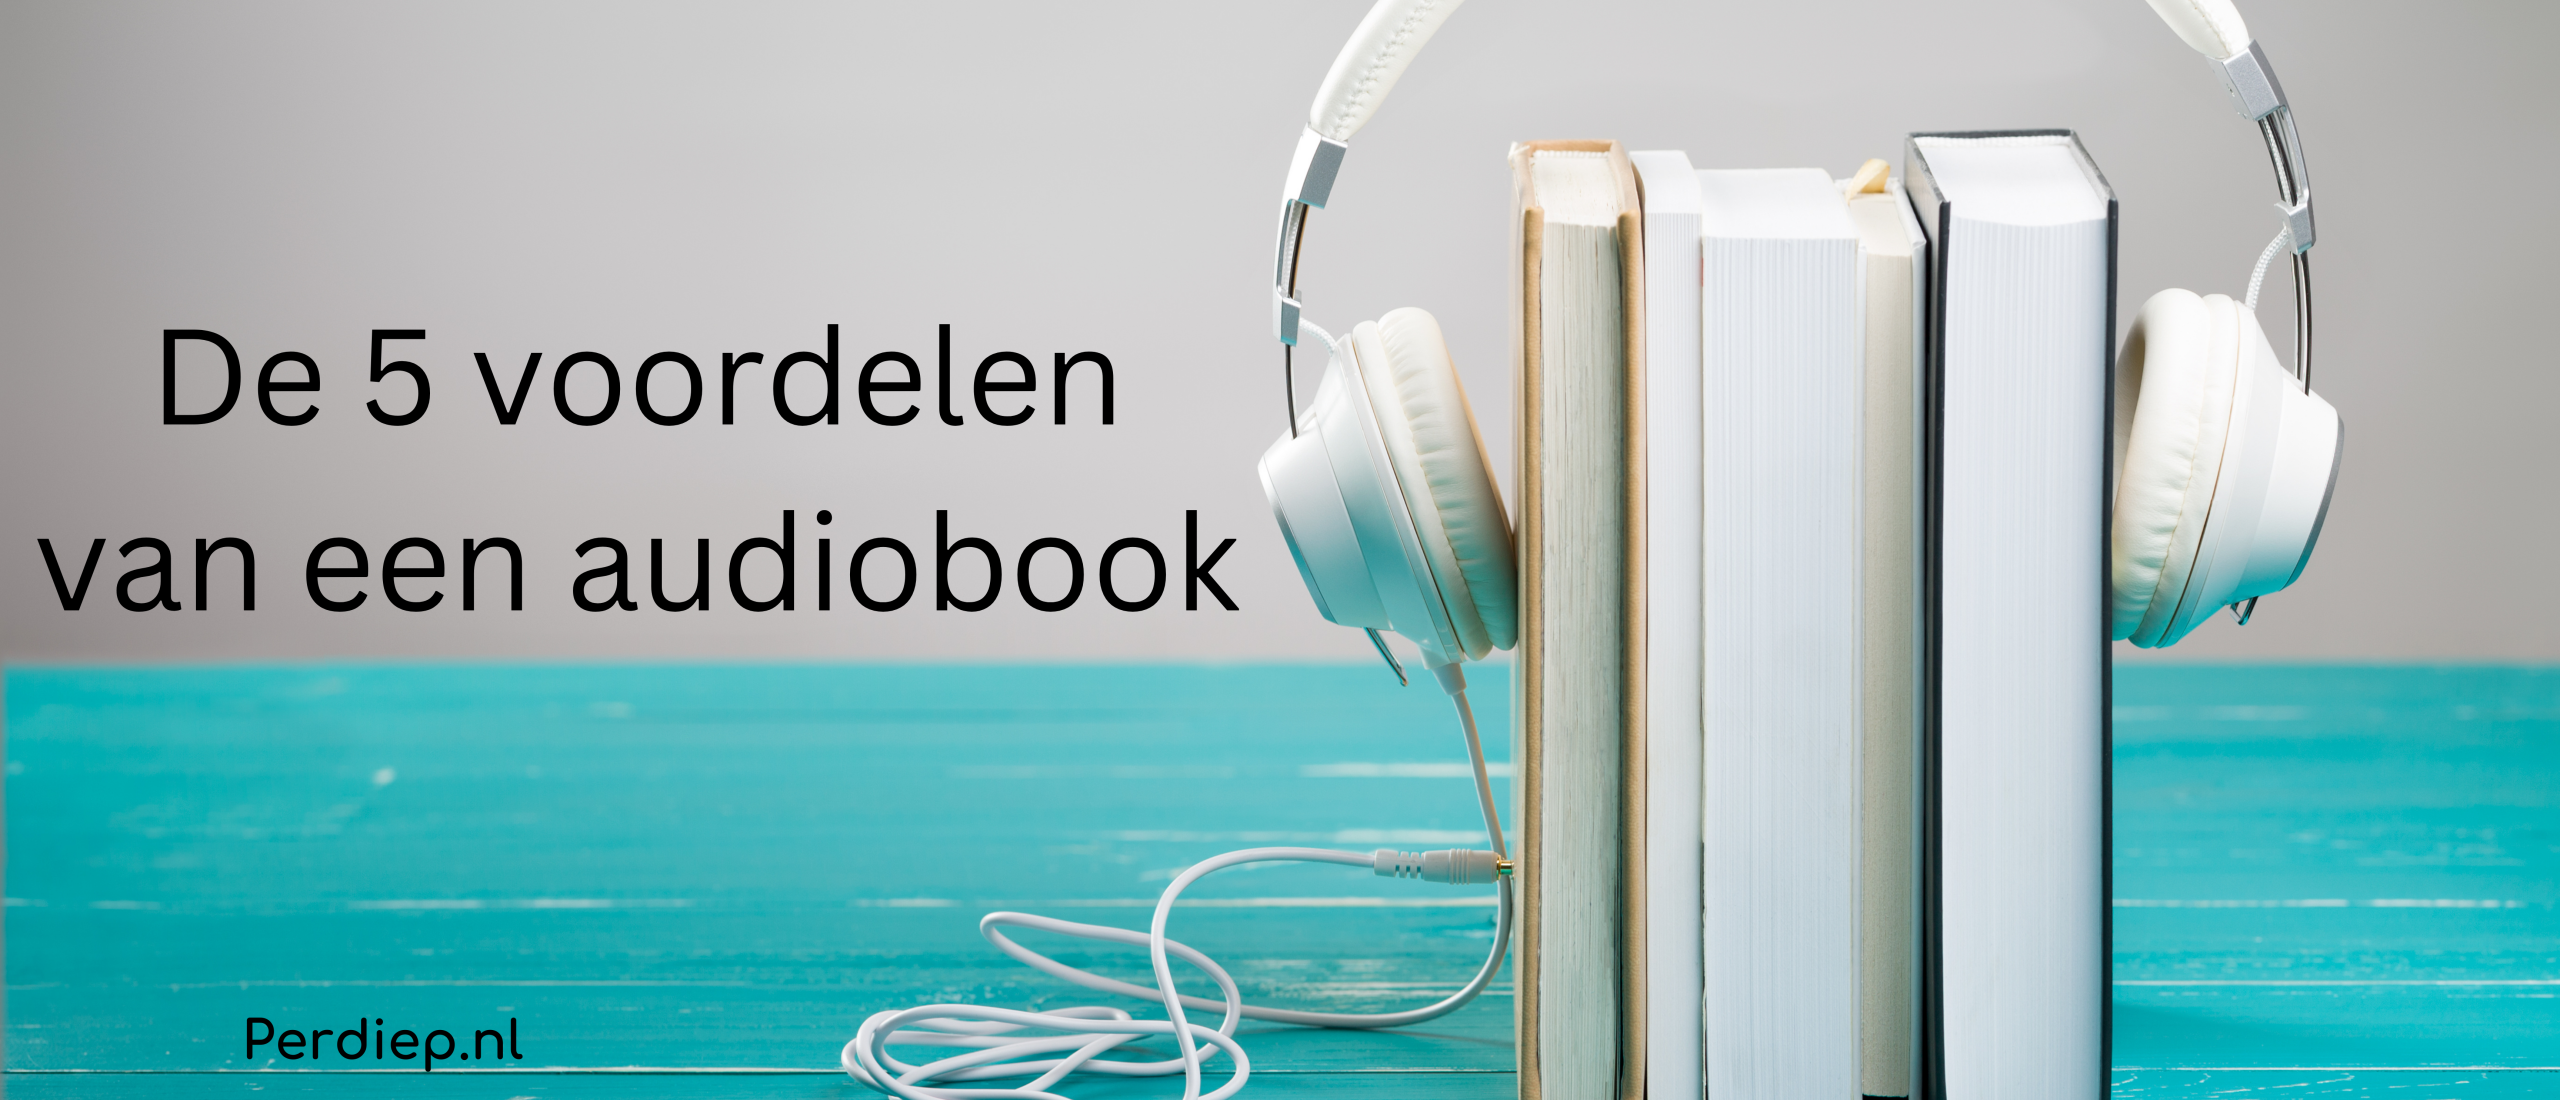 Schrijfcoach Perdiep Ramesar - blog - audiobooks - Perdiep.nl